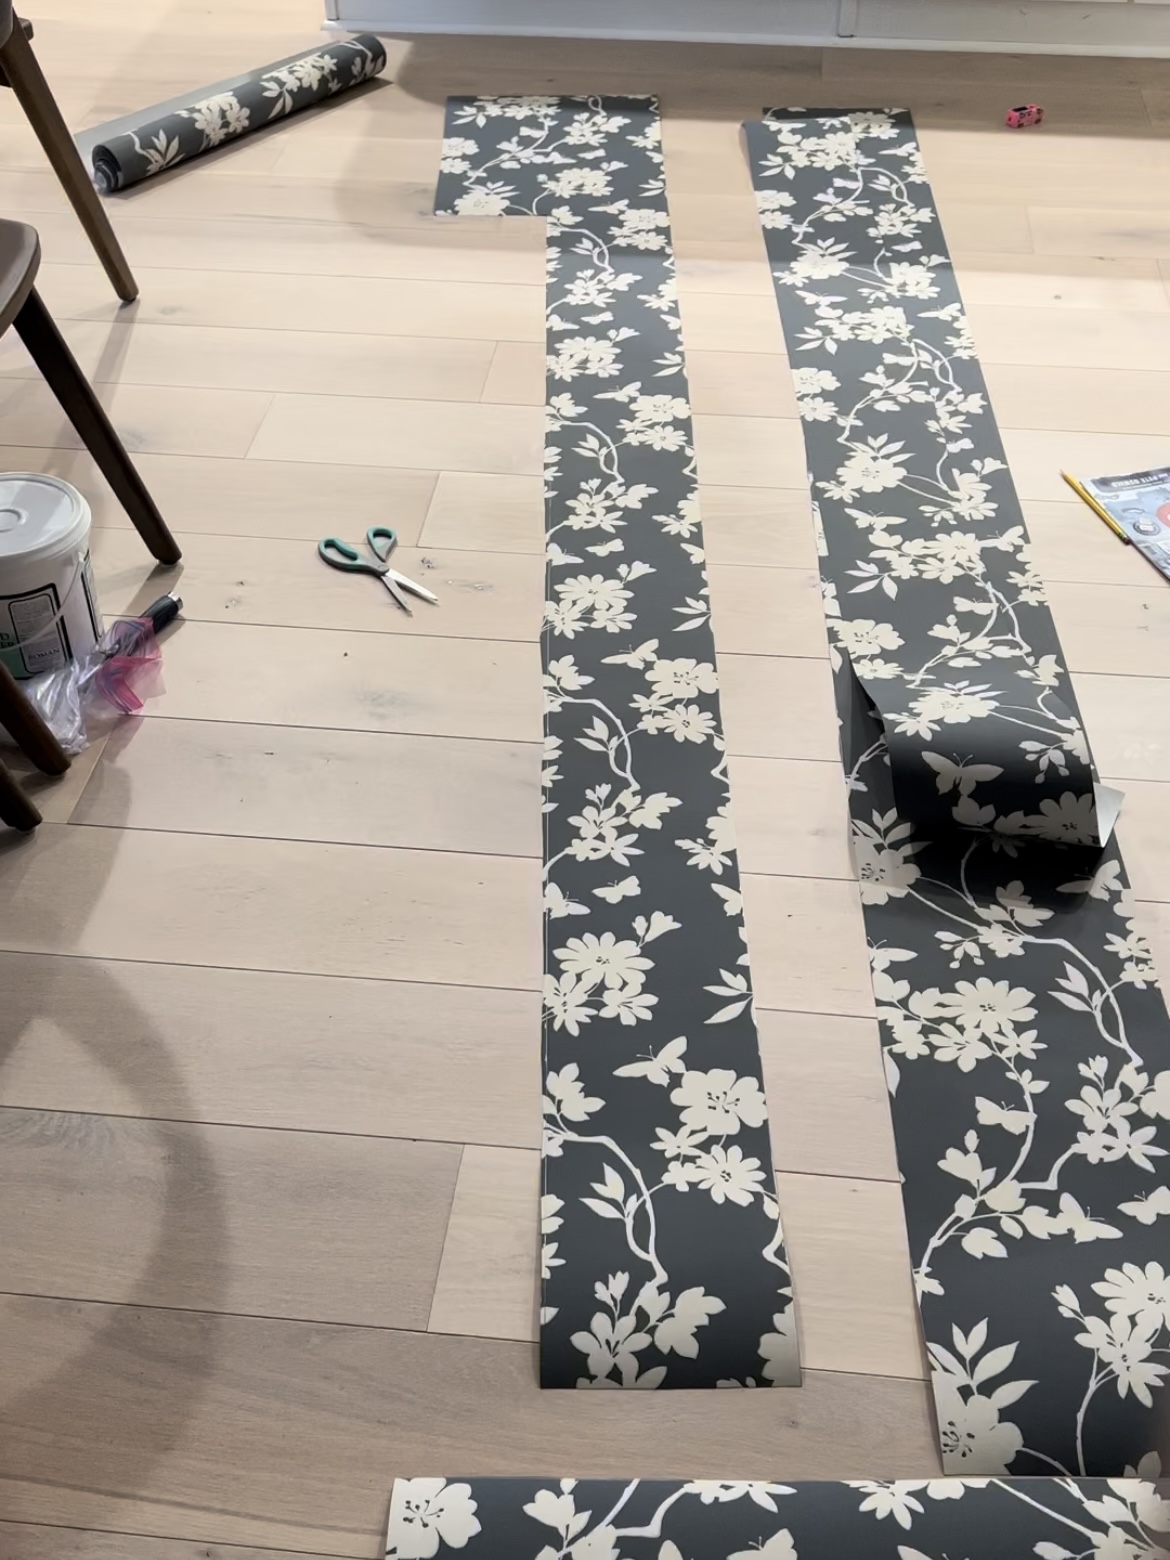 Strips of wallpaper on a floor.